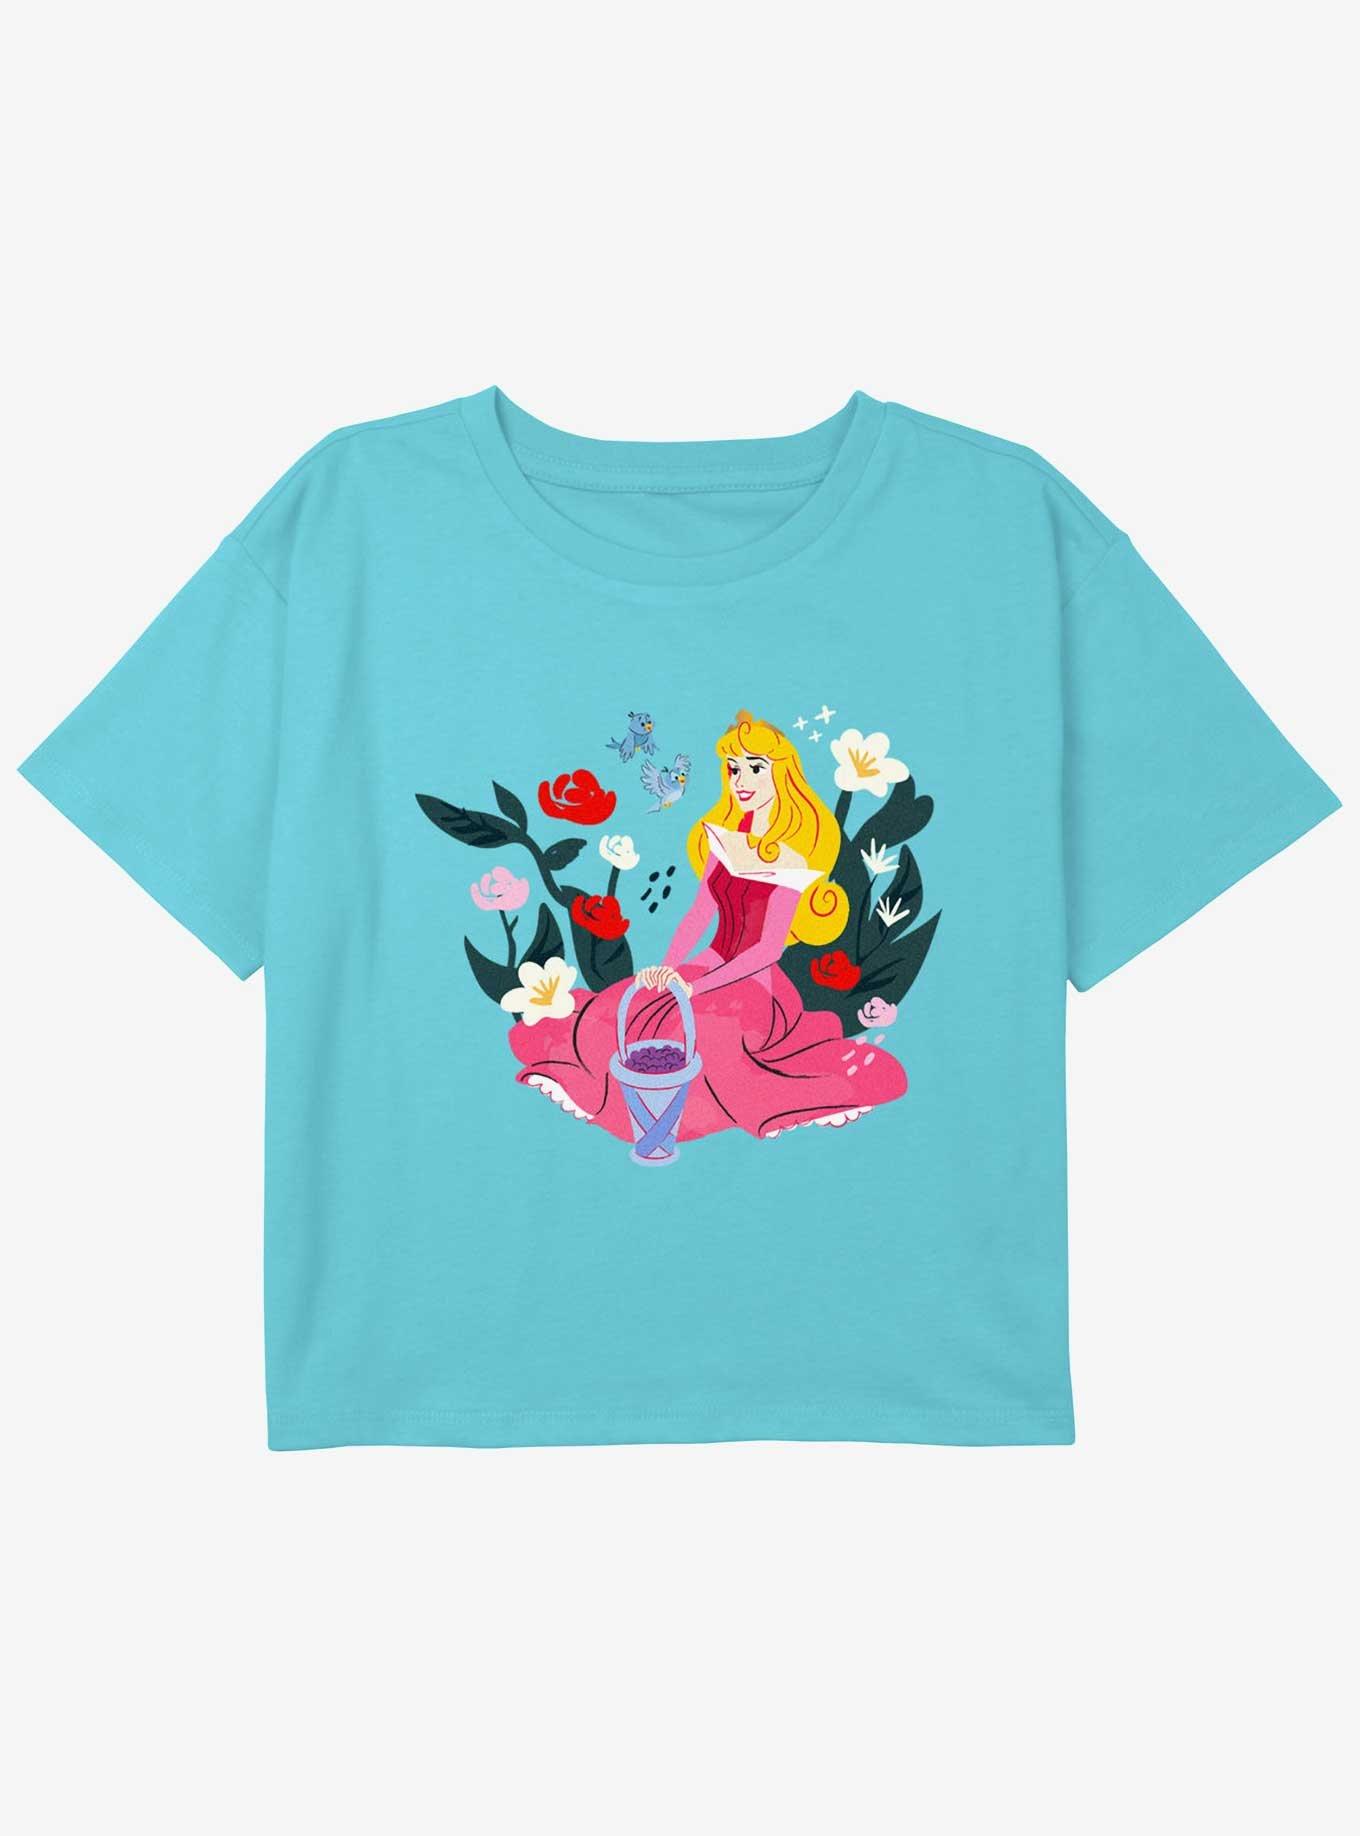 Disney Sleeping Beauty Aurora With Birds Girls Youth Crop T-Shirt, BLUE, hi-res